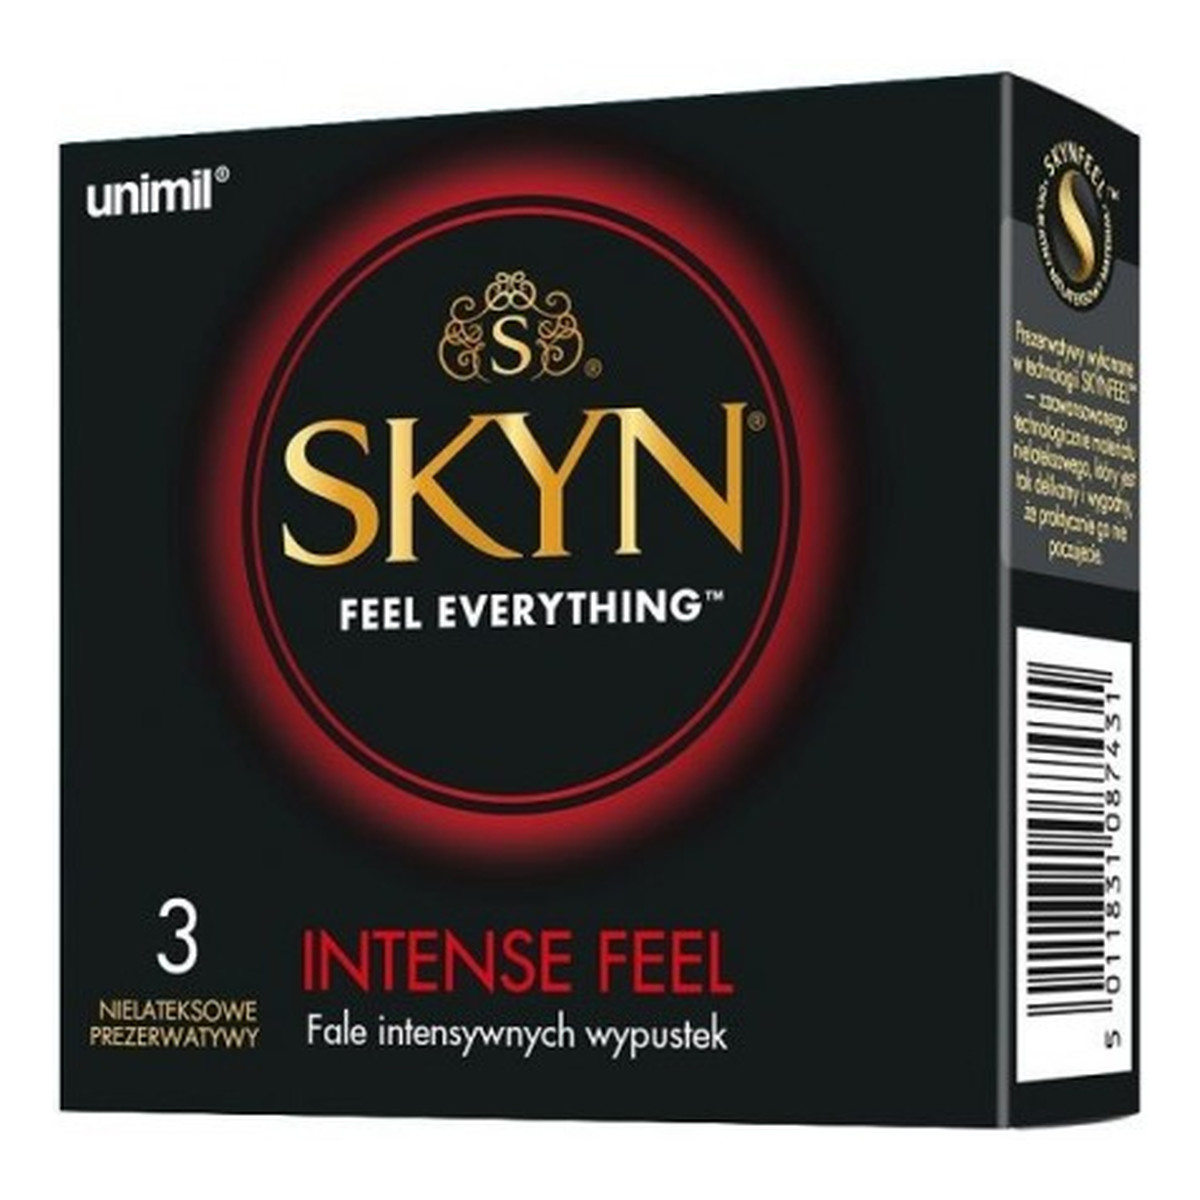 Unimil Skyn Feel Everything Intense Feel Nielateksowe prezerwatywy 3 szt,.